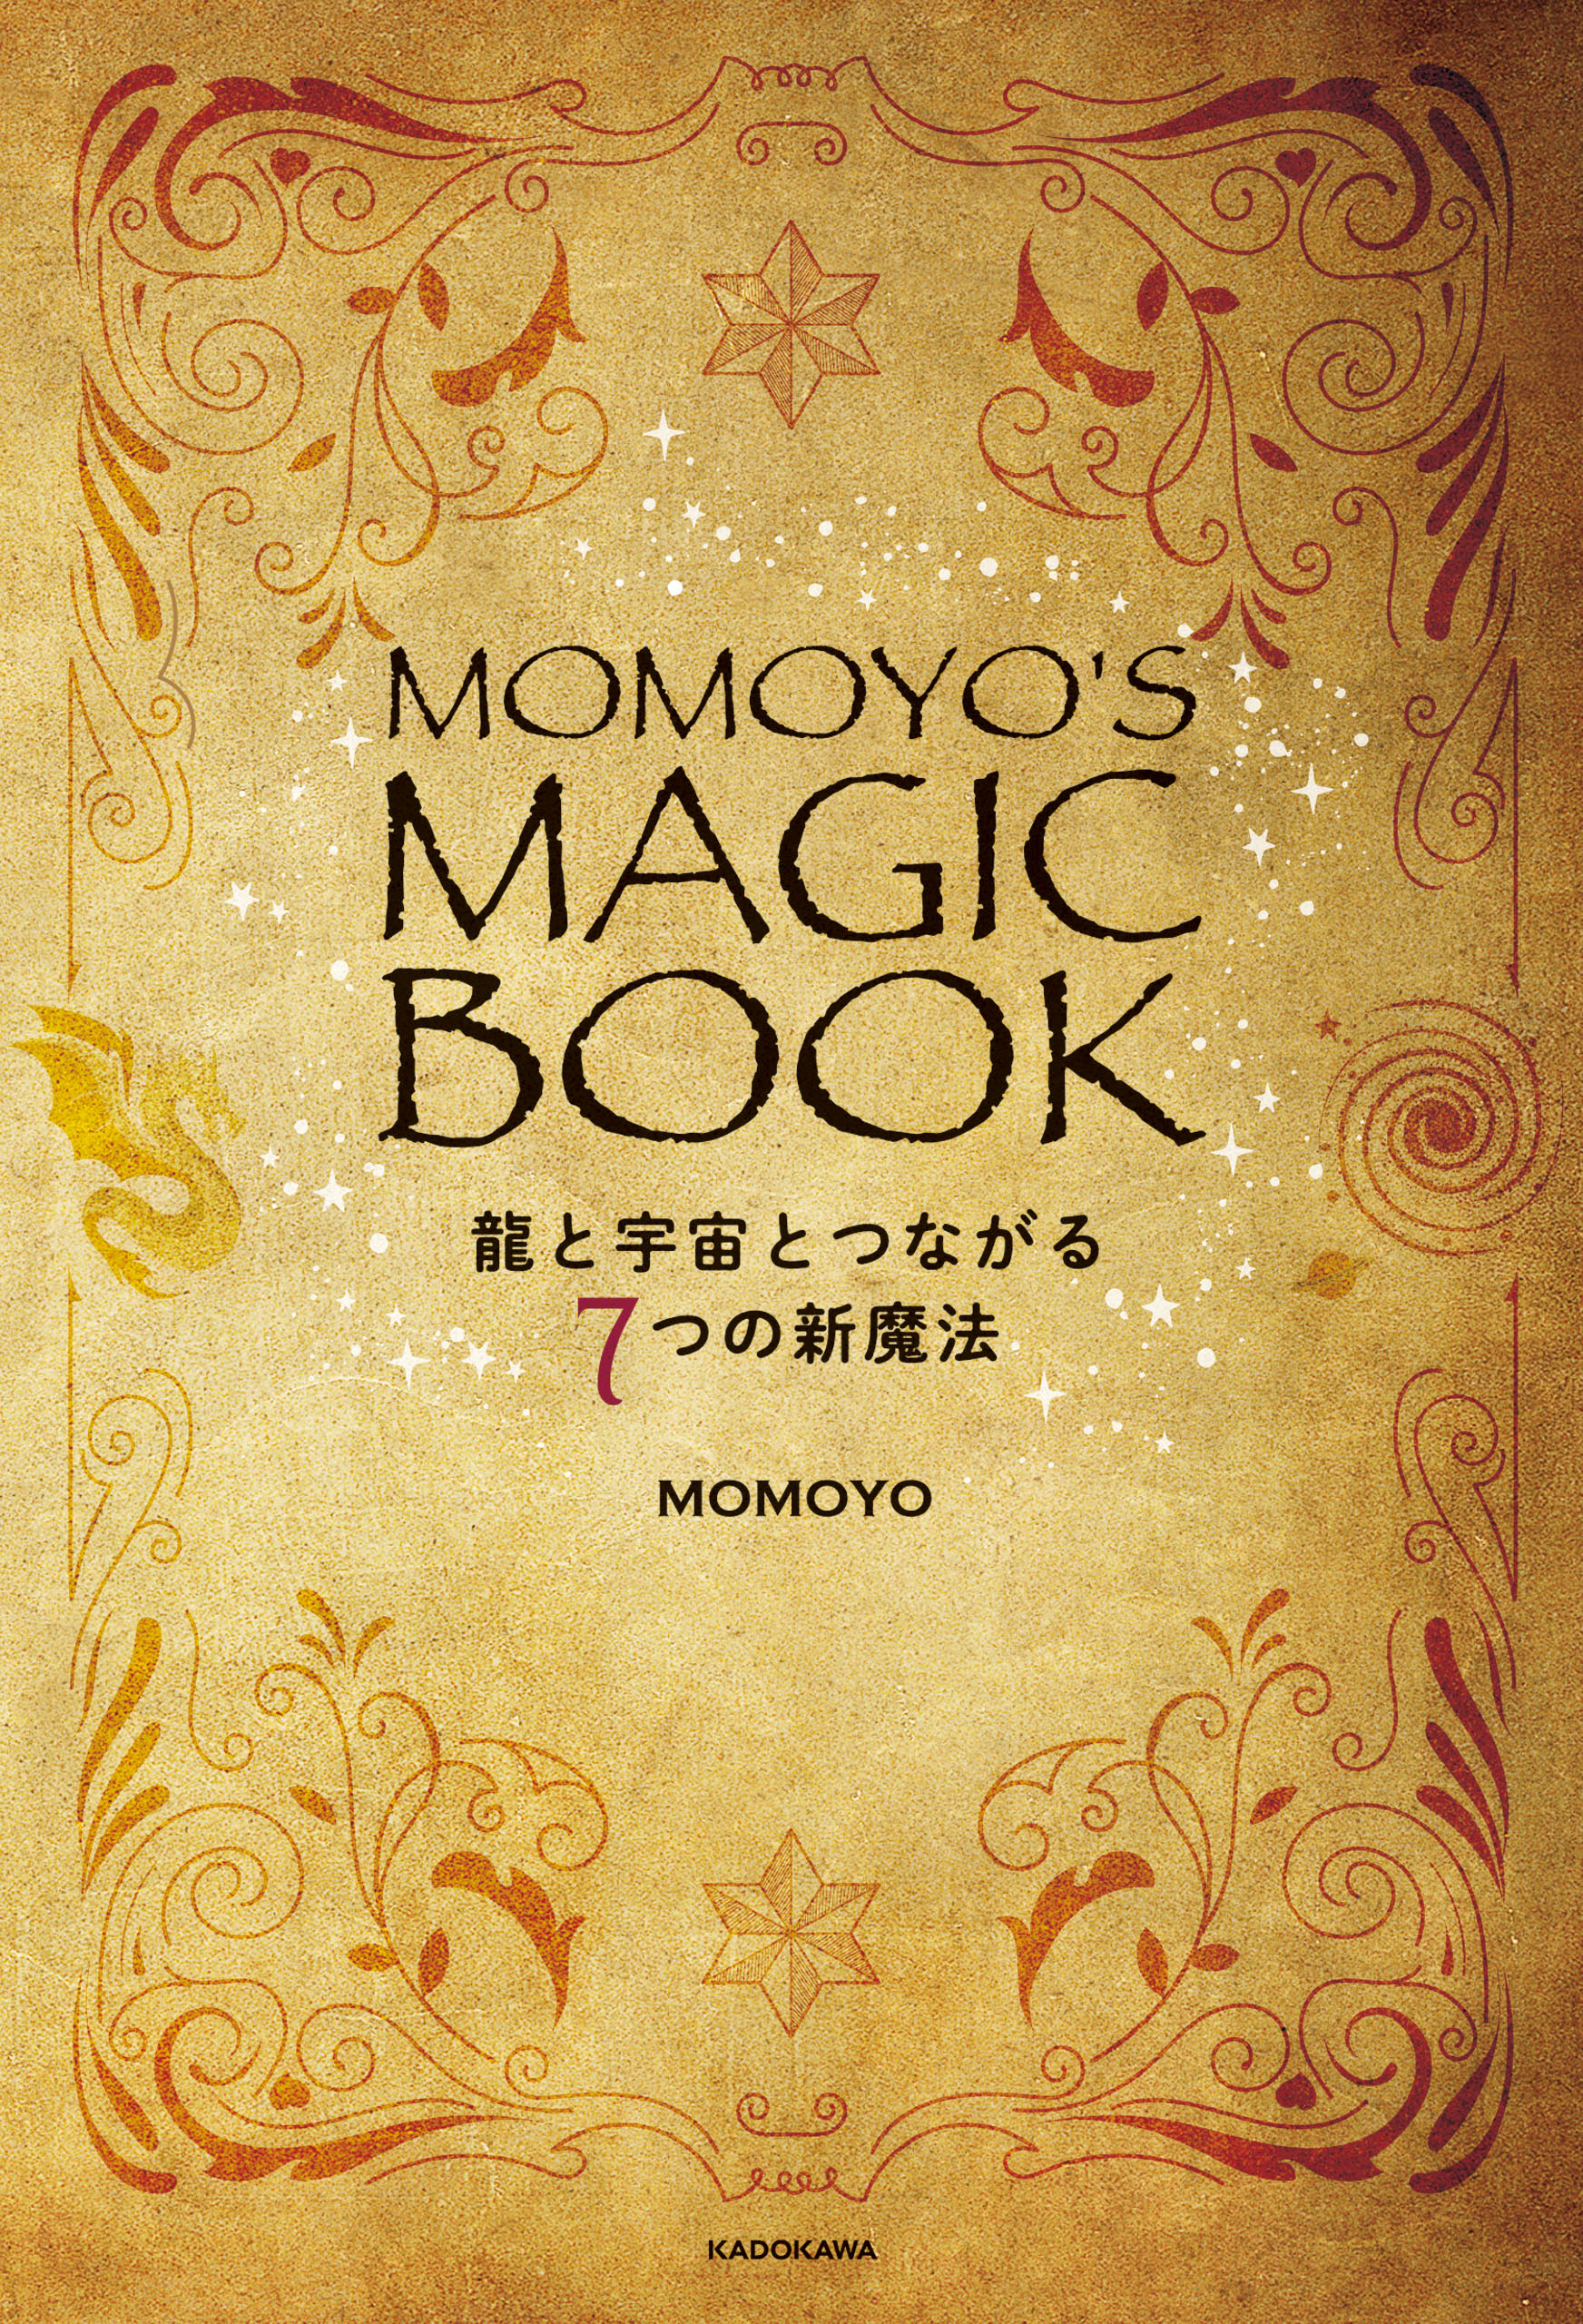 MOMOYO'S MAGIC BOOK 龍と宇宙とつながる７つの新魔法 - MOMOYO - 漫画